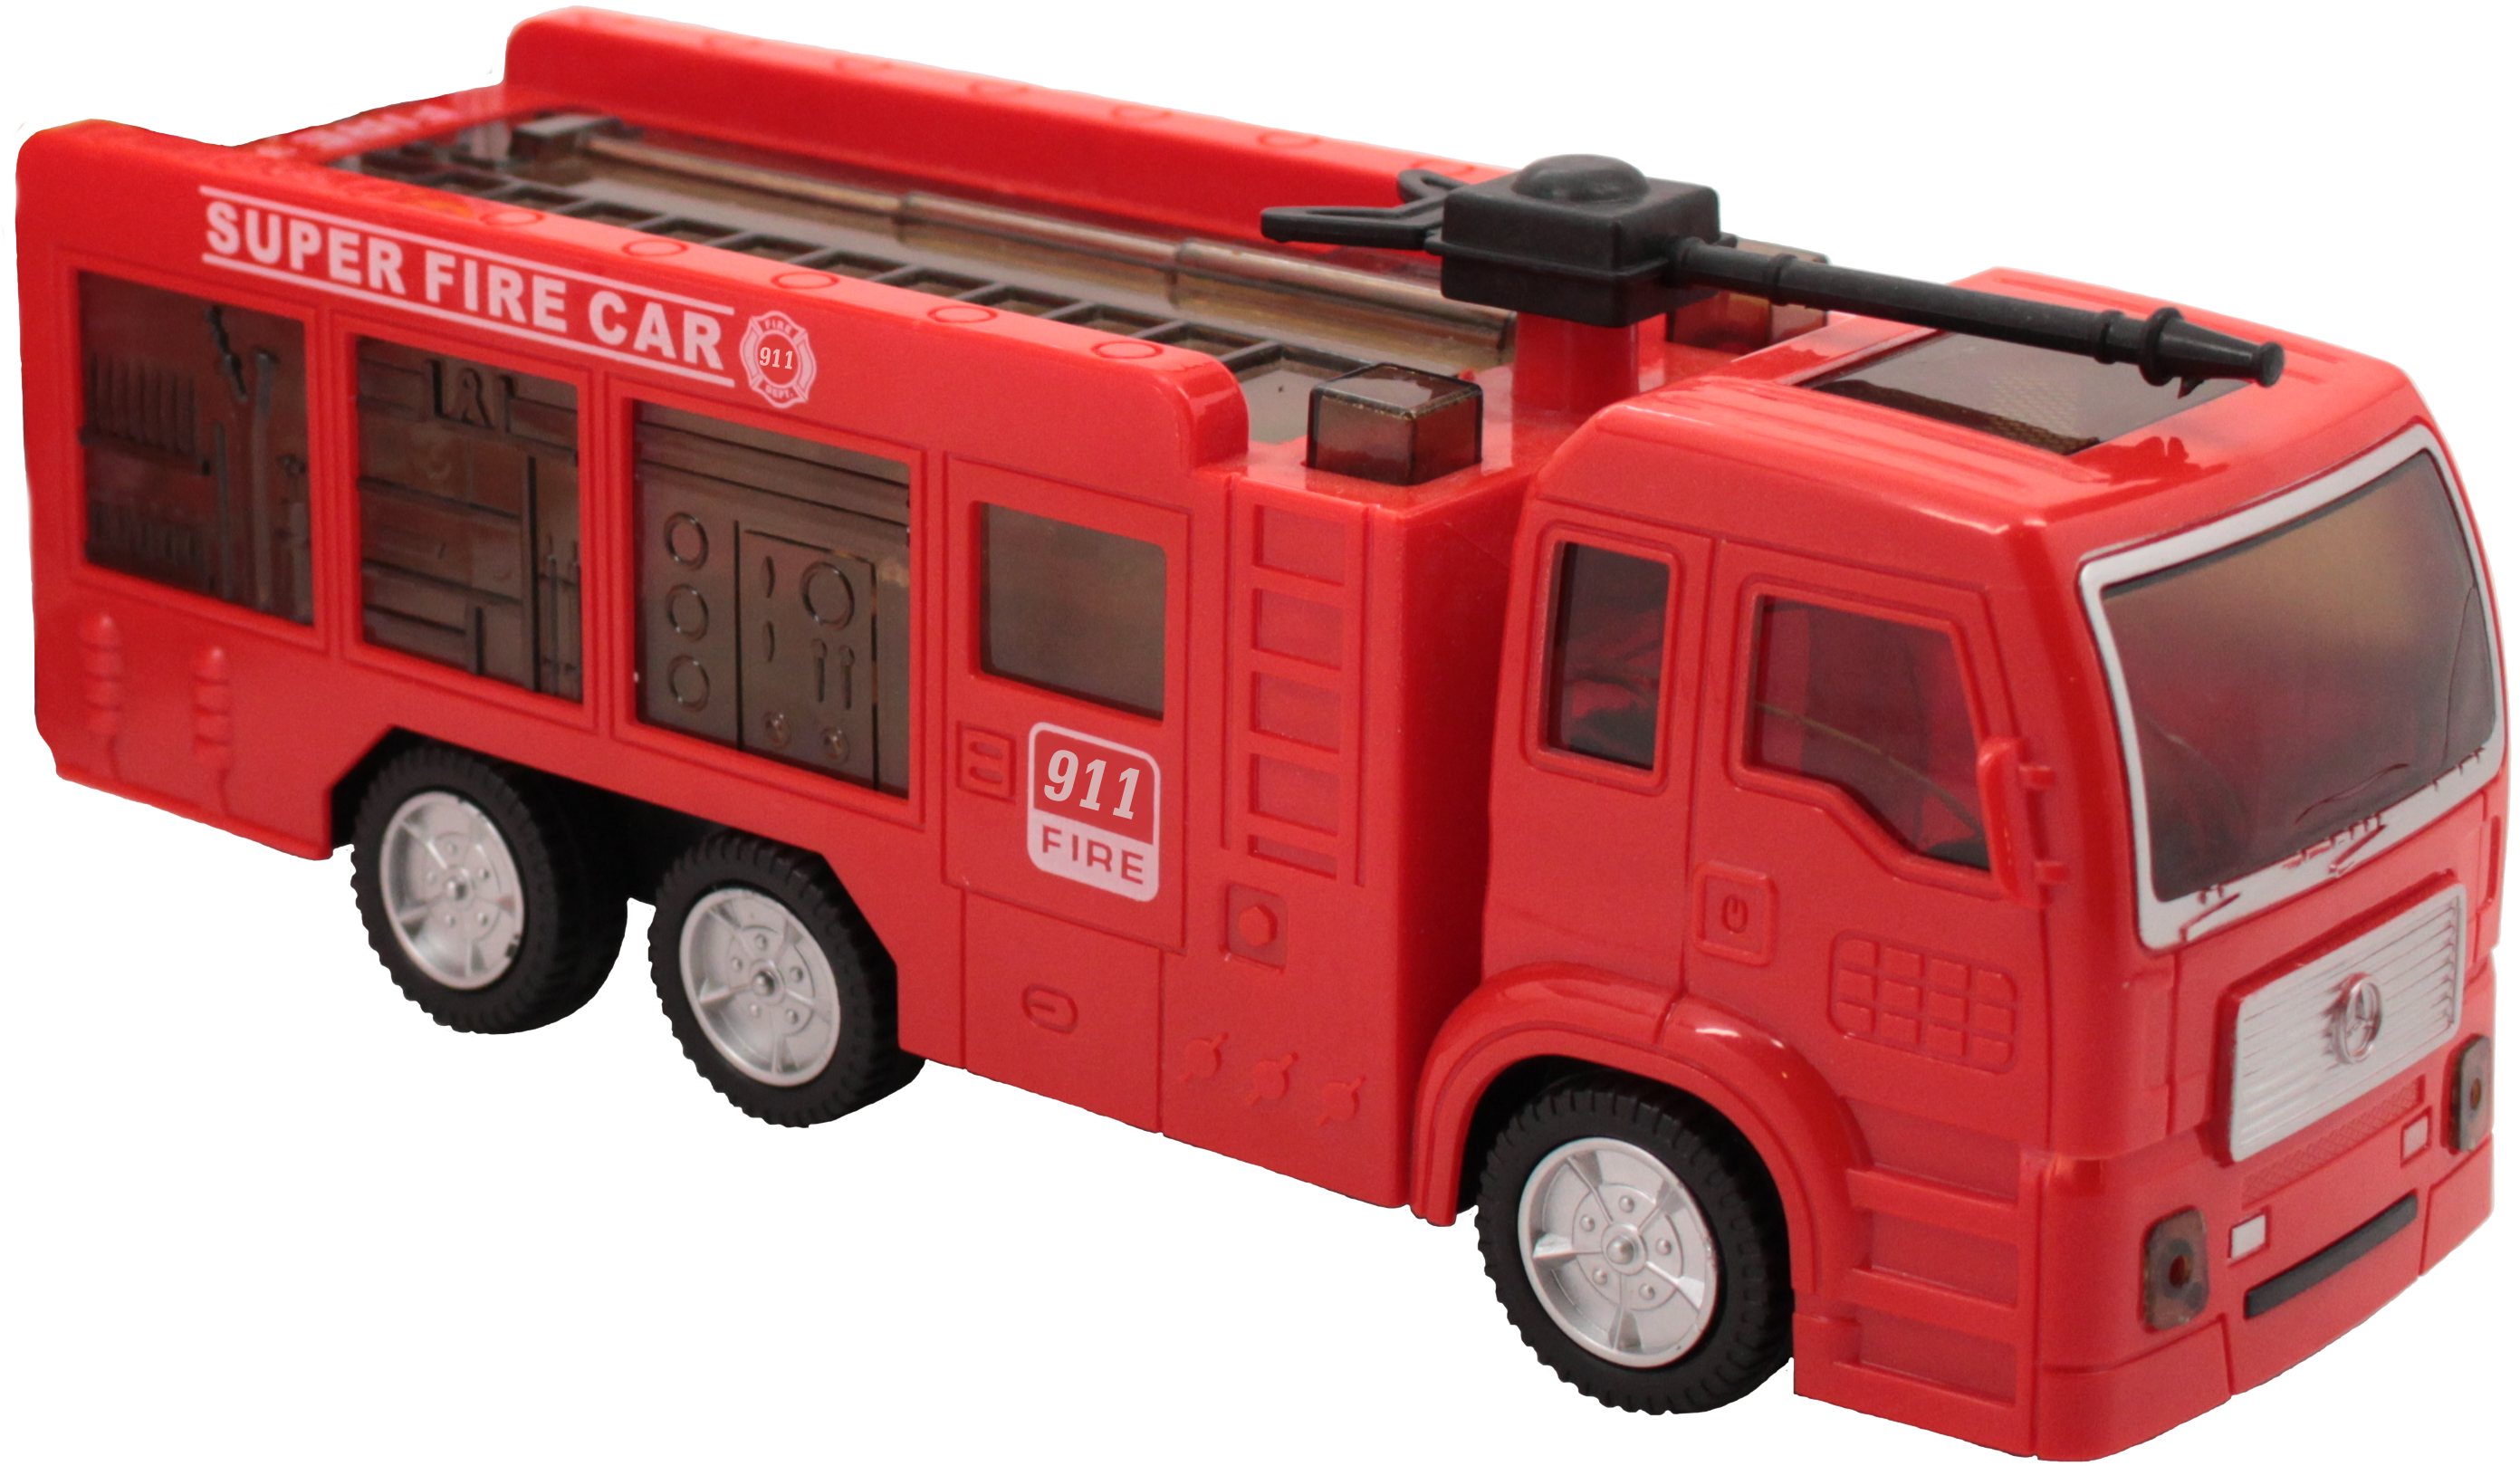 Fire Truck Emergency Response Team Fire Engine For - Techege Toys 911 Fire Truck Emergency Response Team (2869x1712)